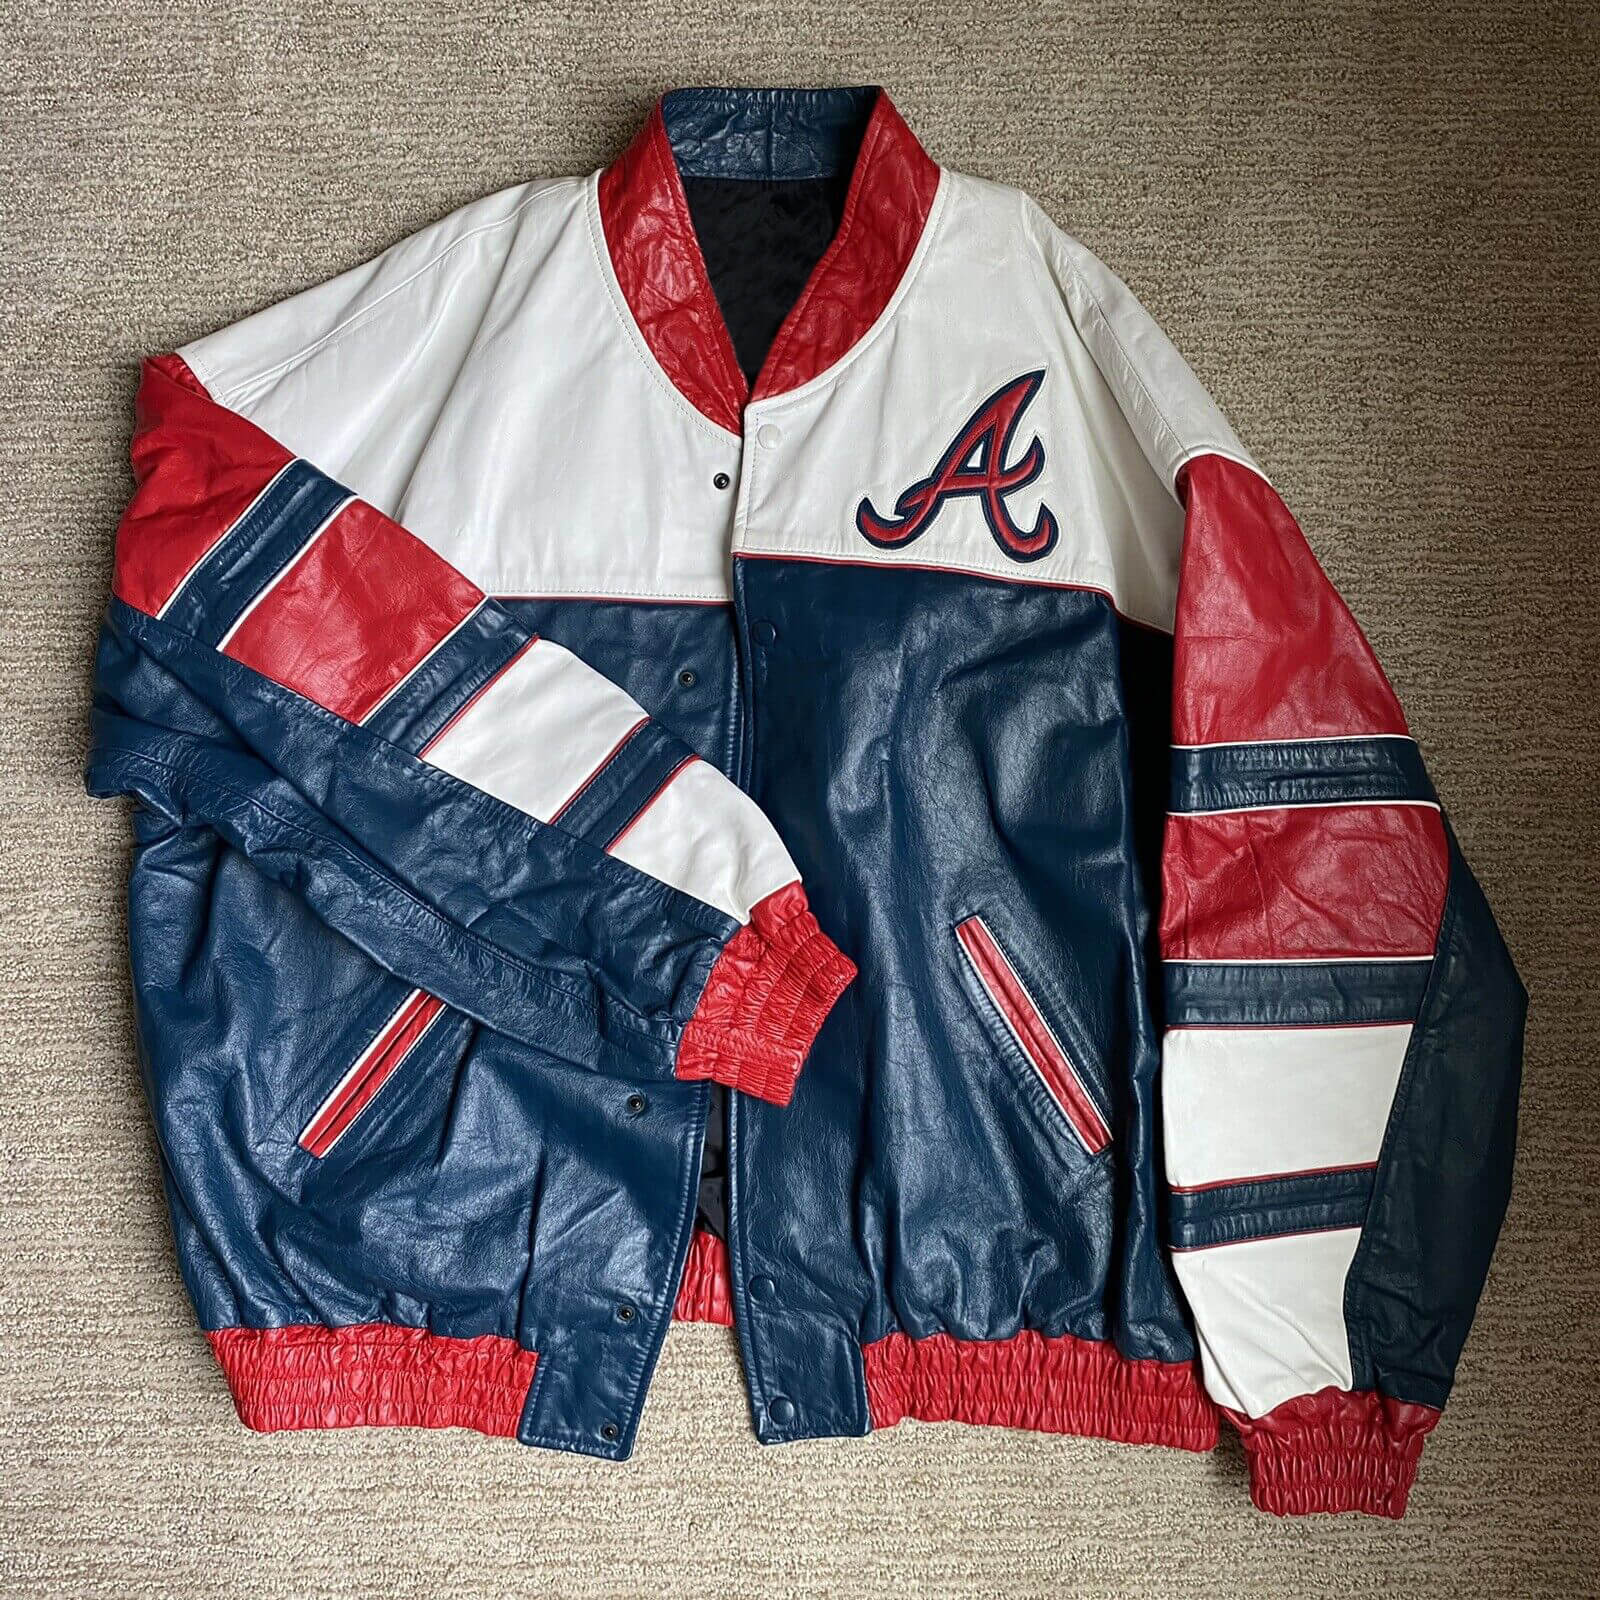 Atlanta Braves Bomber leather jacket - LIMITED EDITION